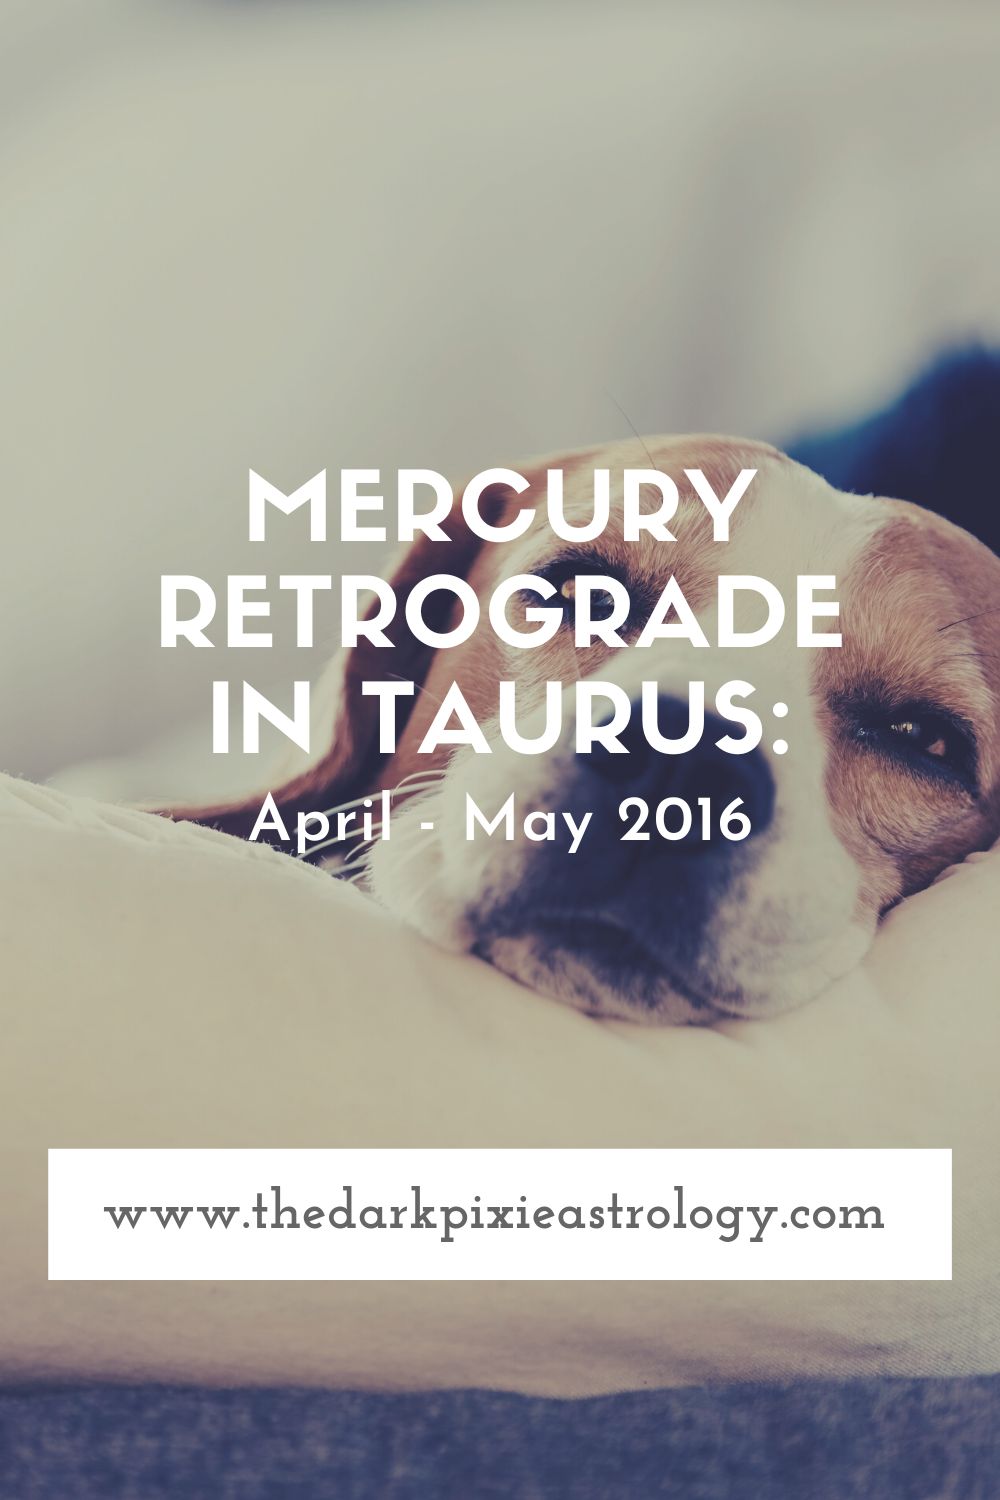 Mercury Retrograde in Taurus: April - May 2016 - The Dark Pixie Astrology